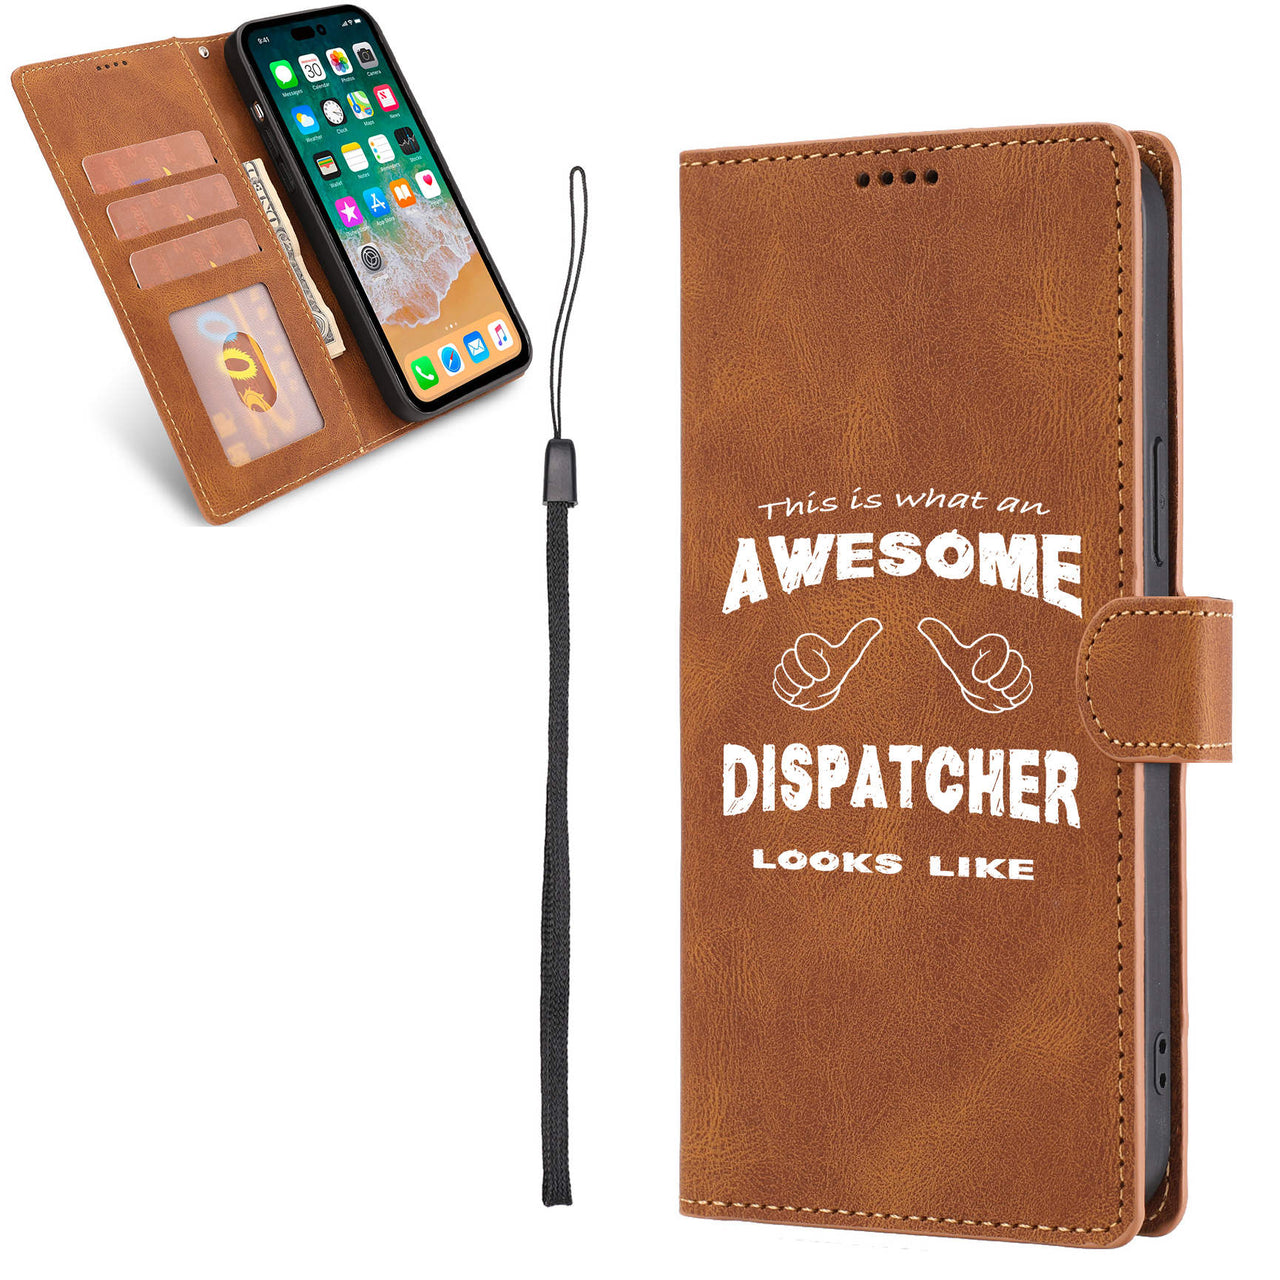 Dispatcher Designed Leather iPhone Cases